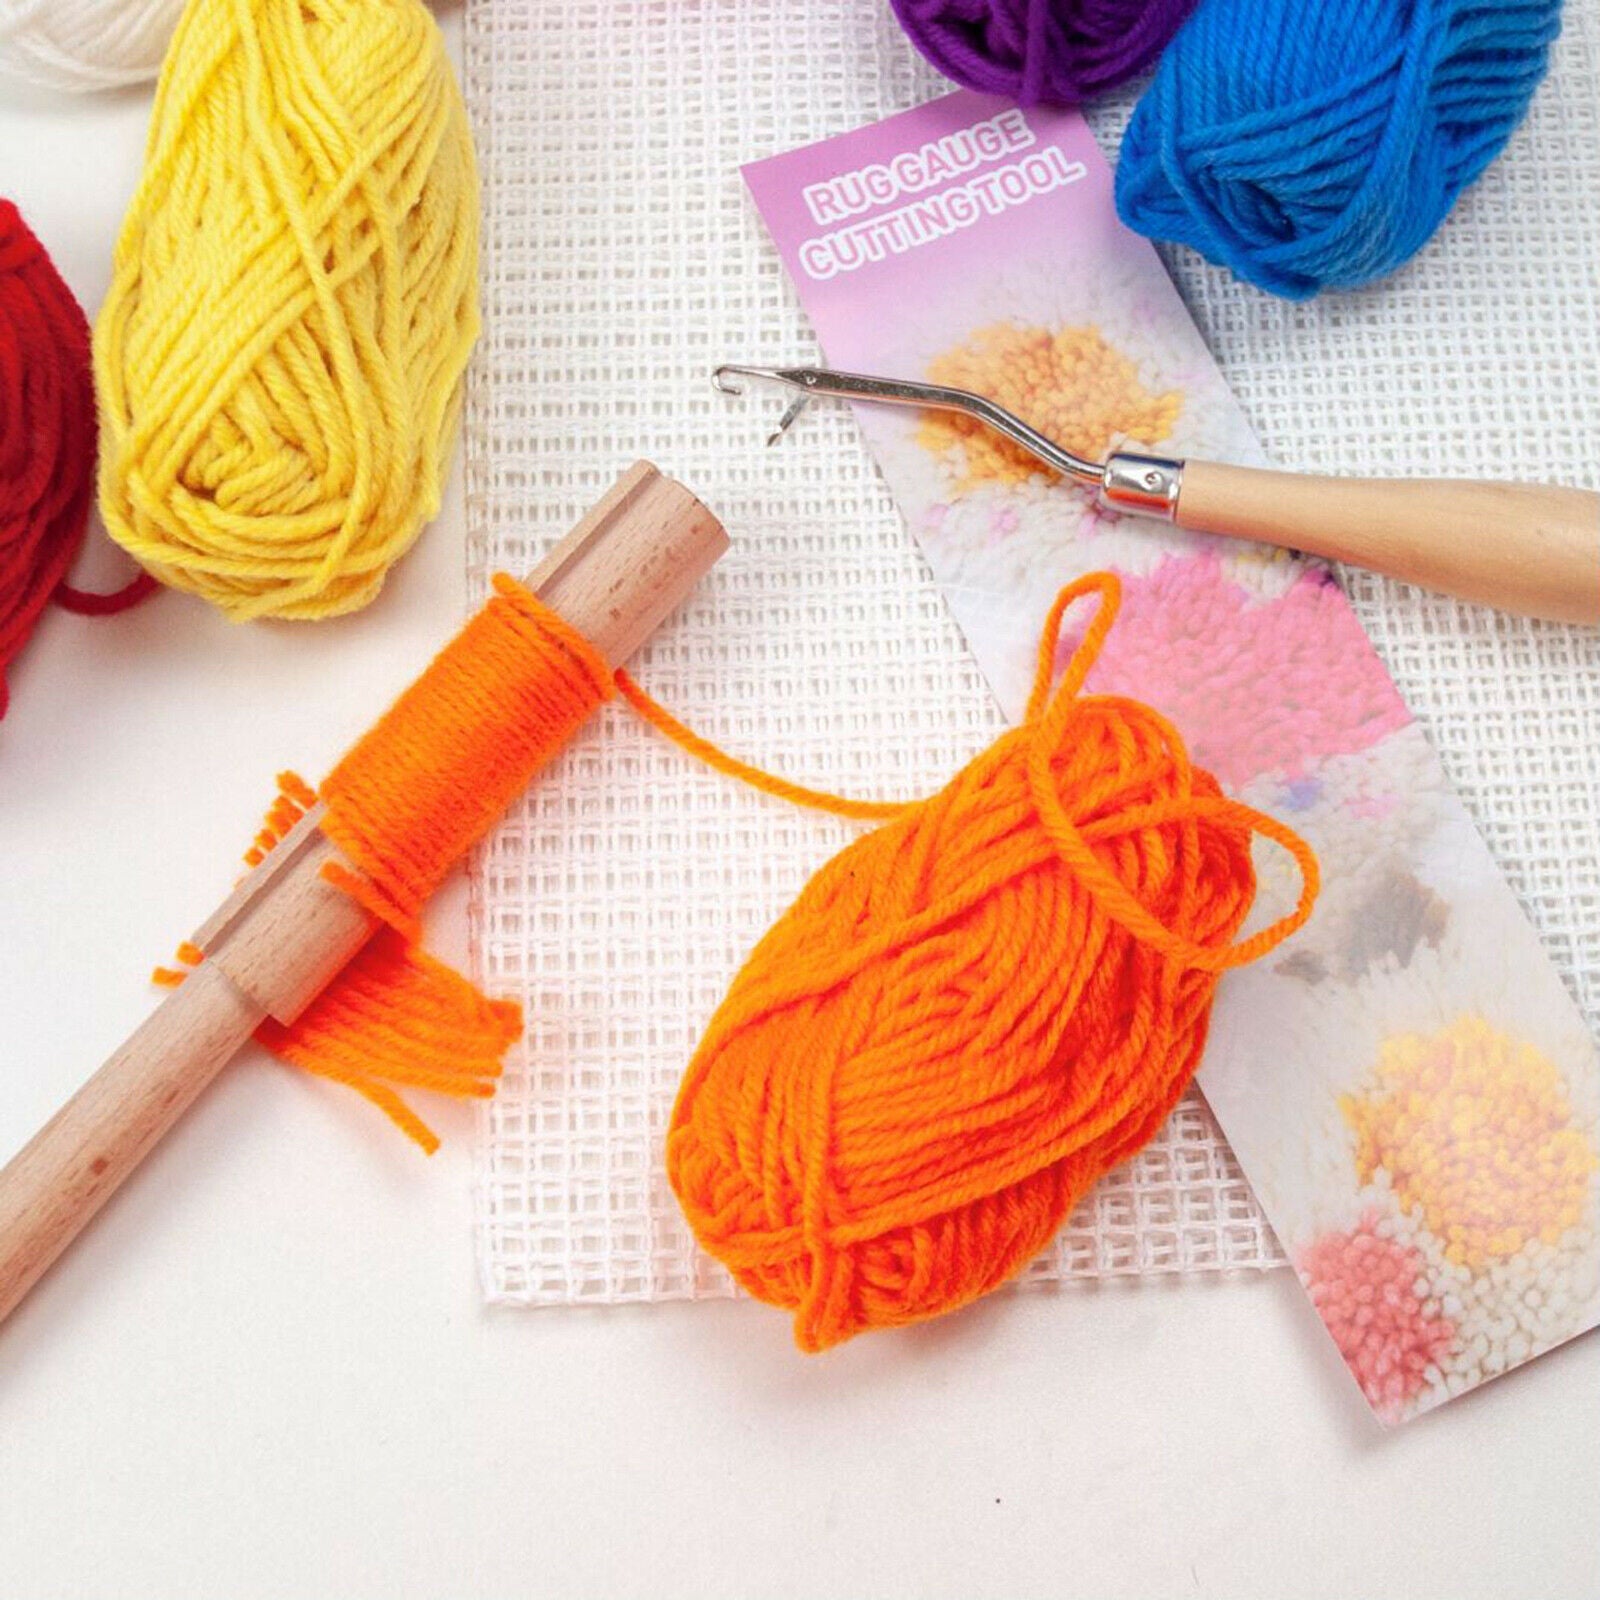 Latch Hook Rug Yarn Kits Supplies Knitting Sewing Crochet Accessories Kit